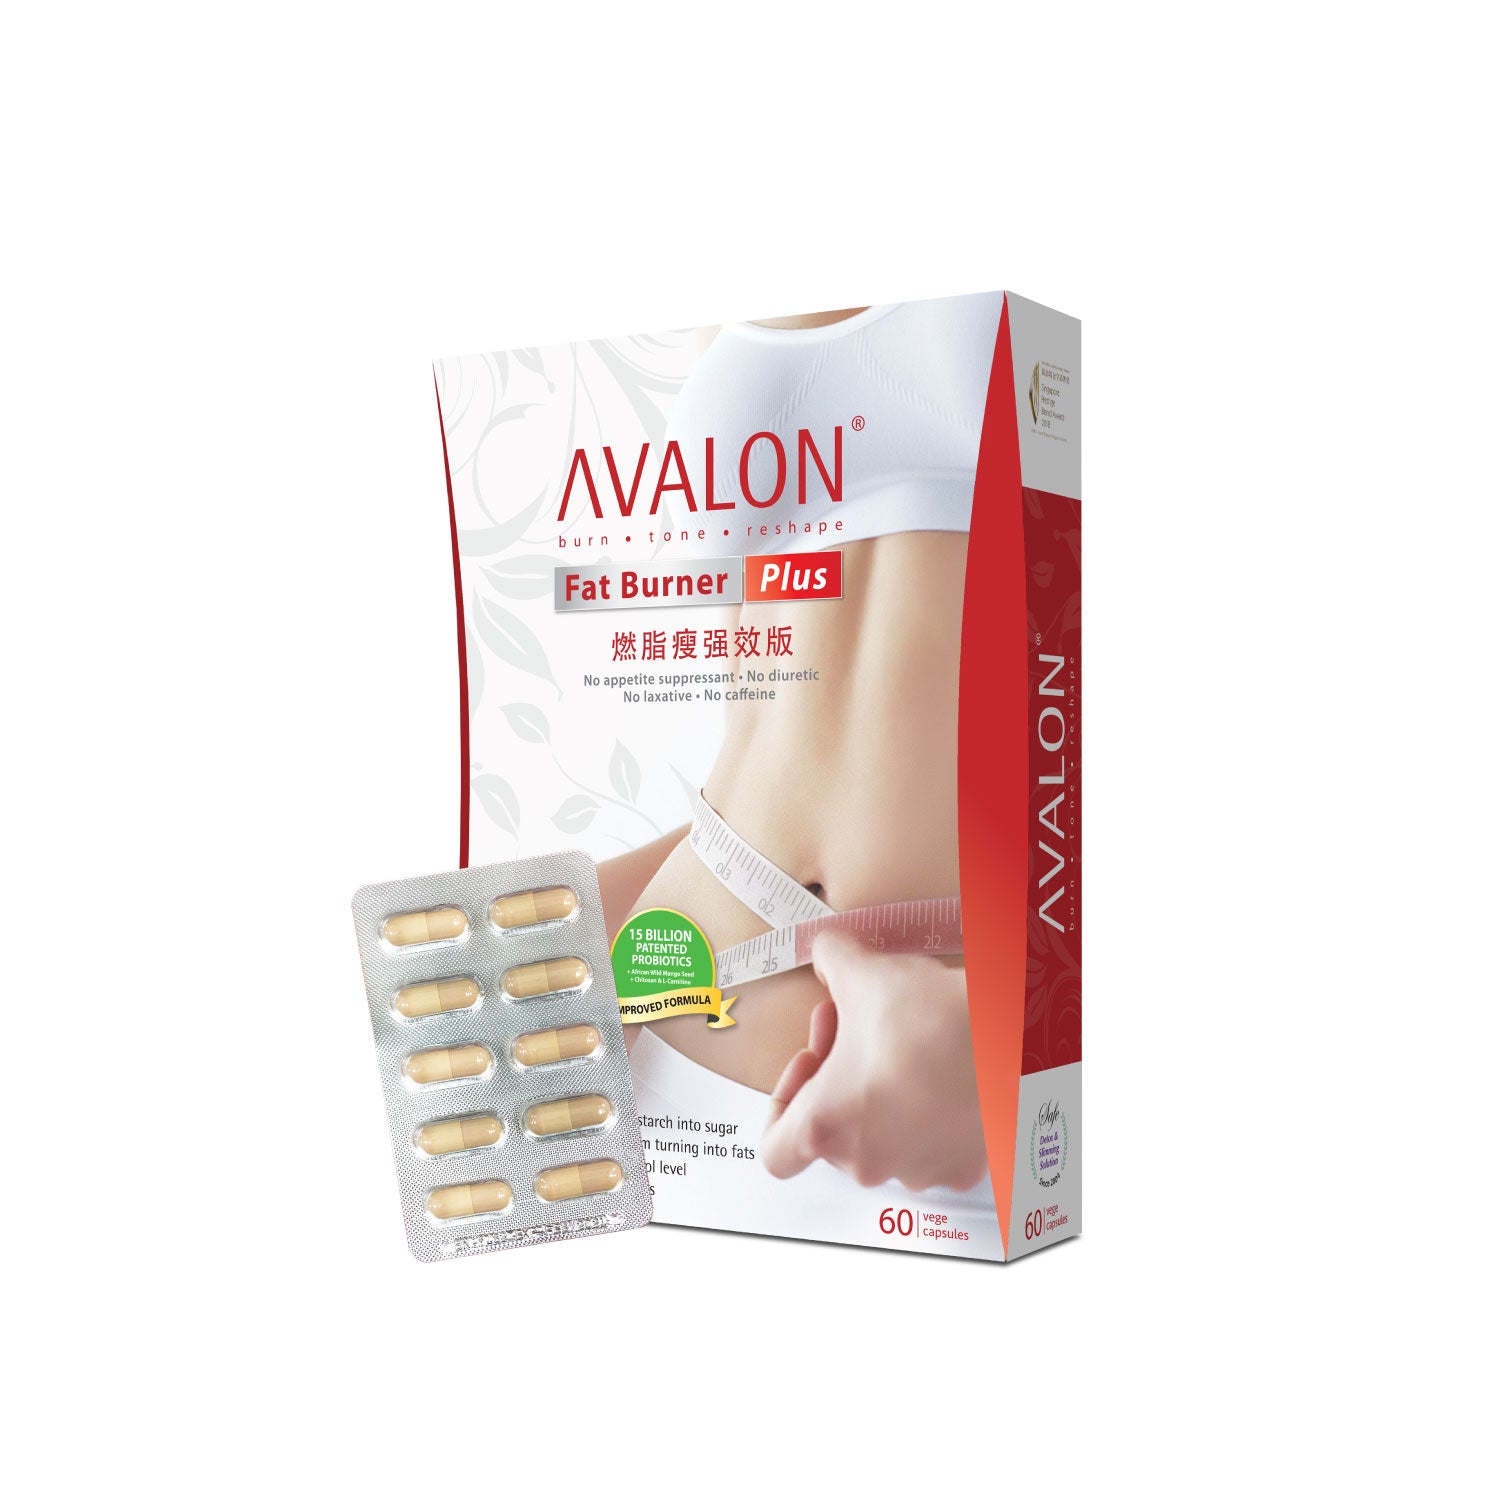 AVALON® Fat Burner Plus (w/ 15 Billion Patented Slimming Probiotics)